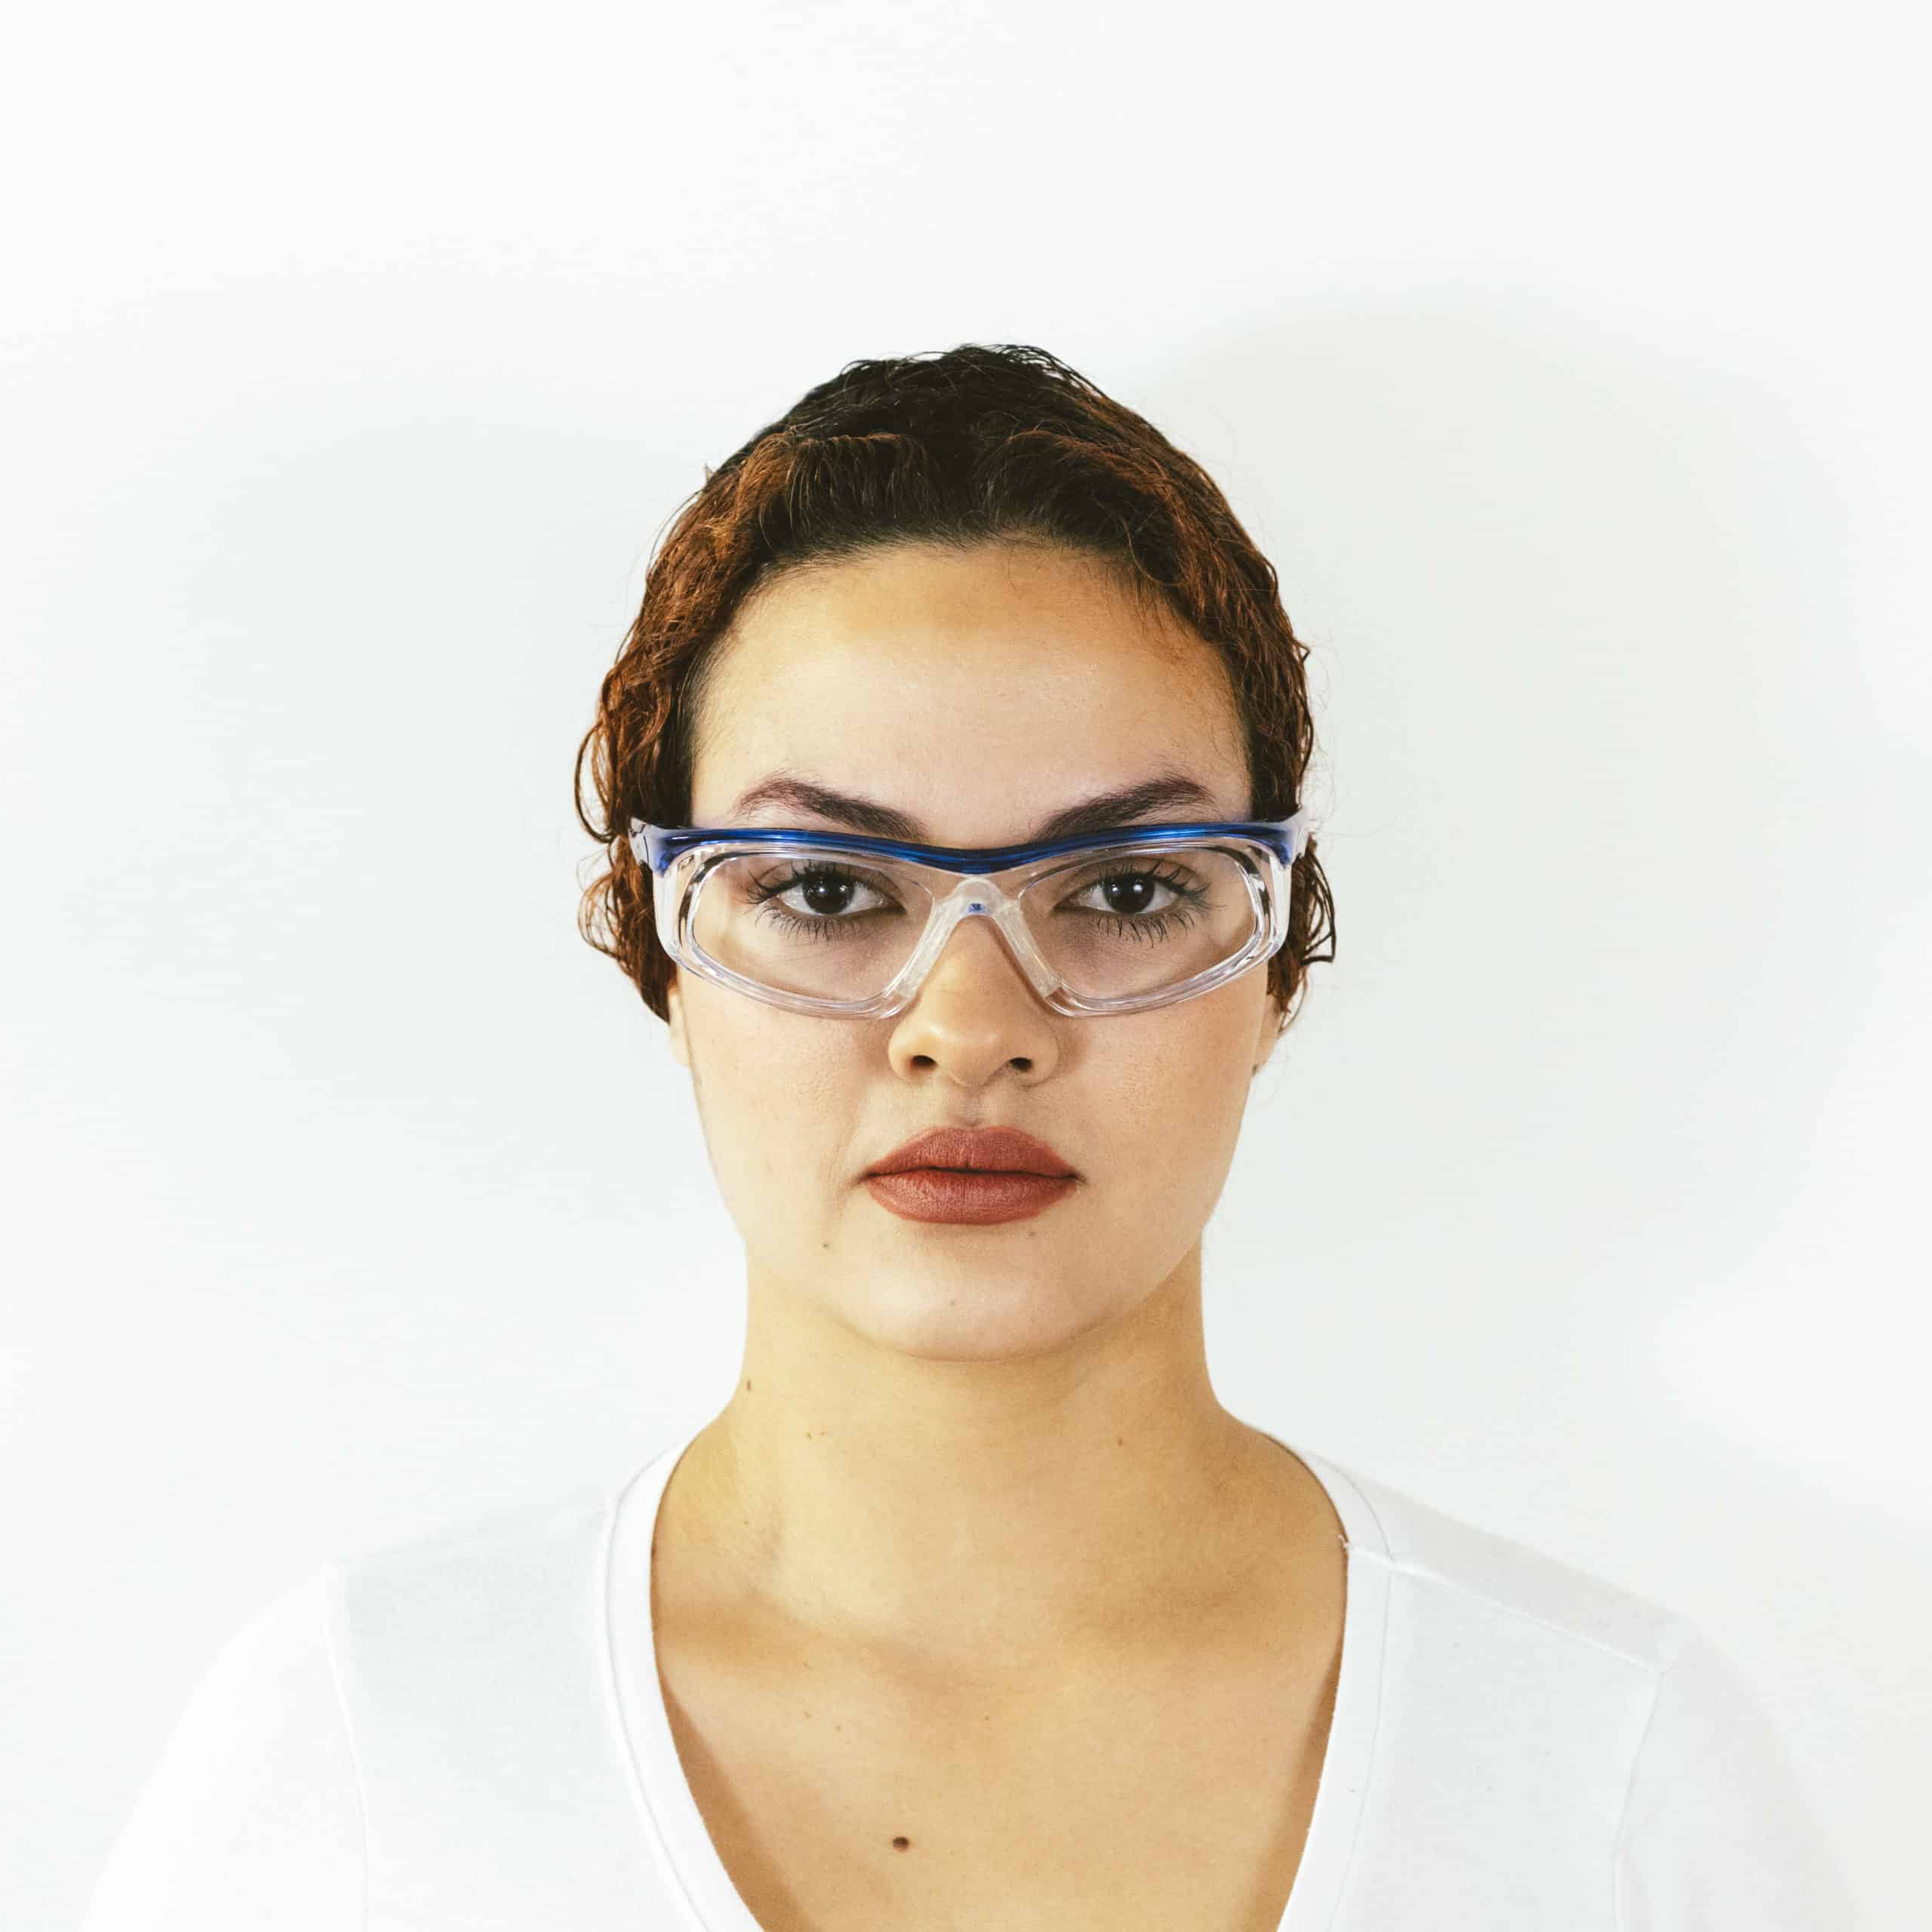 Vortex ANSI Rated Prescription Safety Glasses - SafetyGearPro.com - #1 ...